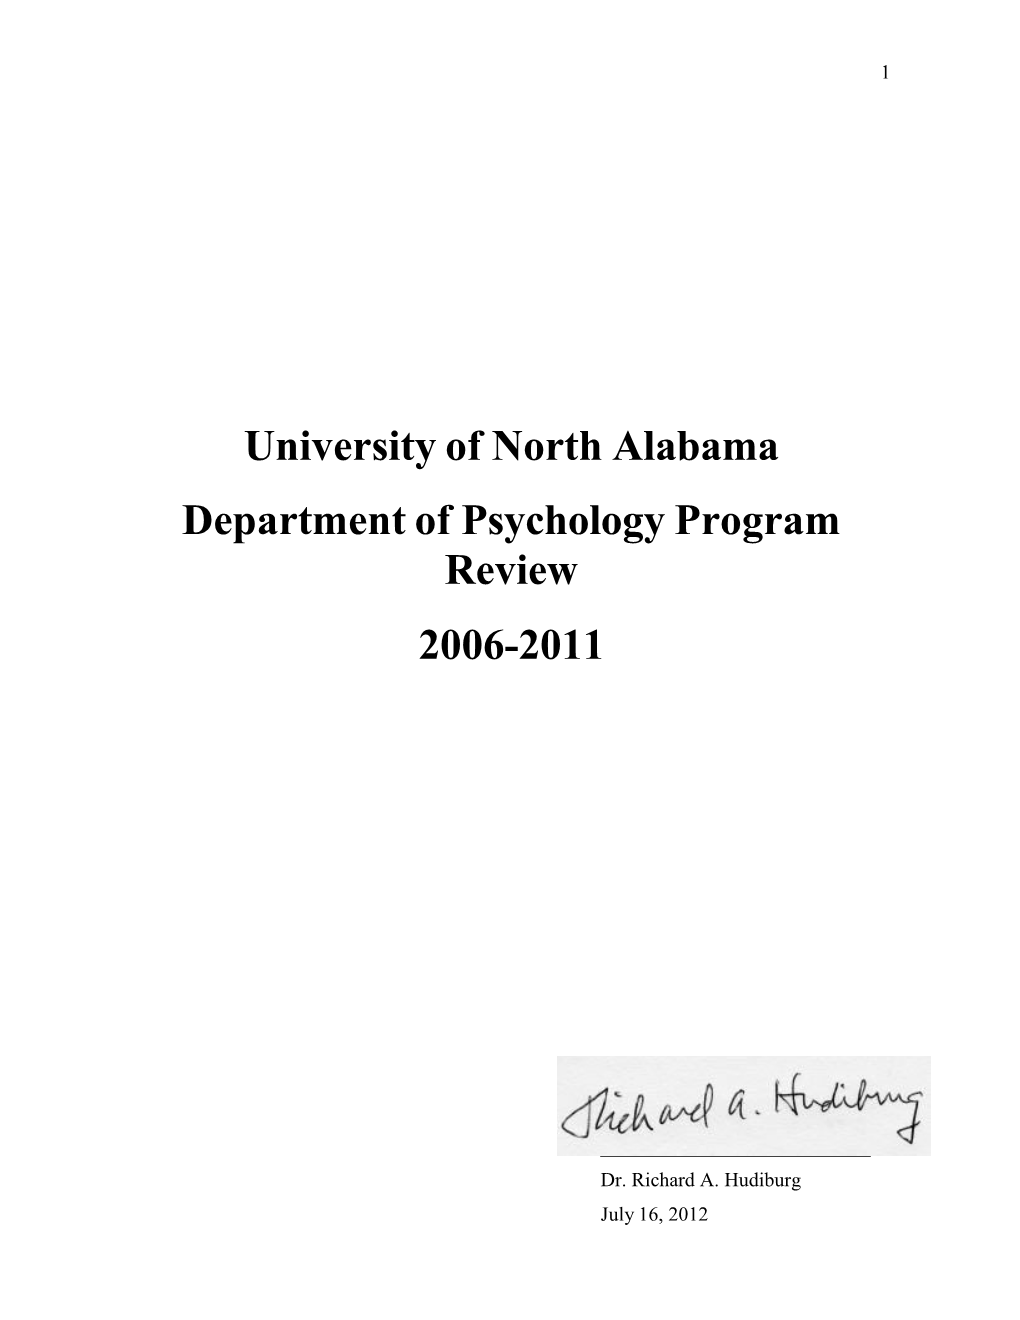 University of North Alabama Department of Psychology Program